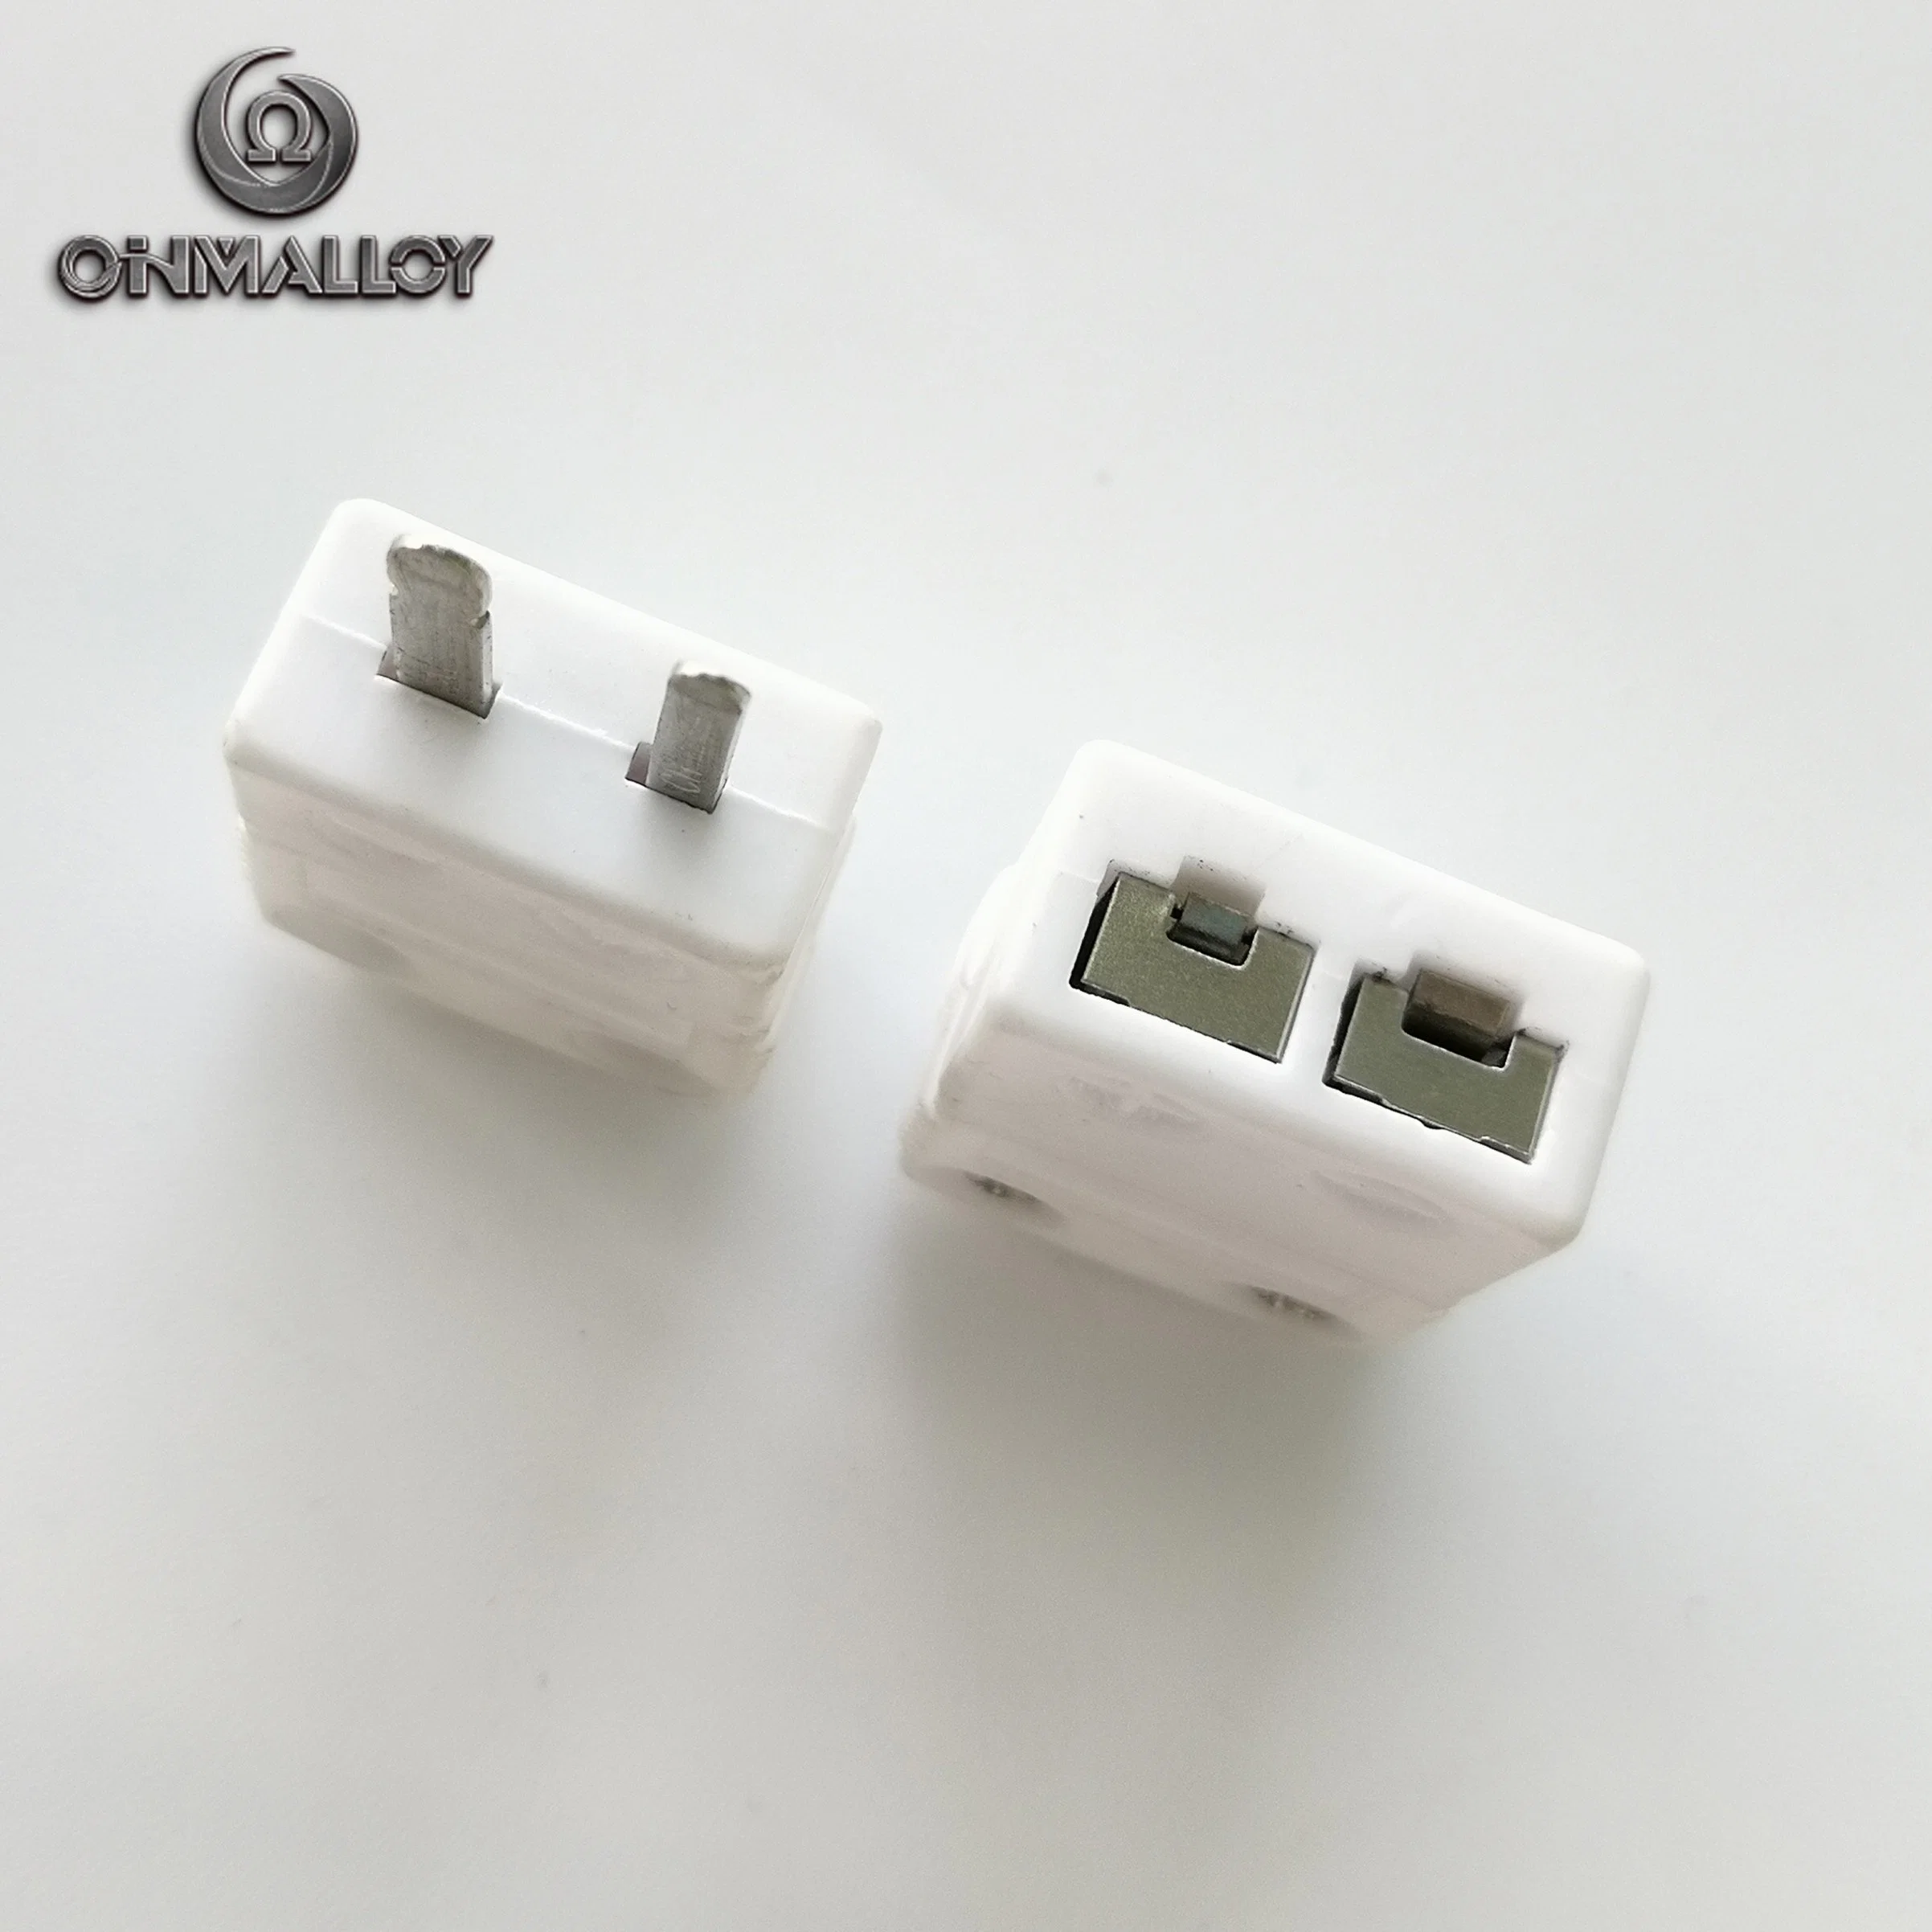 Ceramic Thermocouple Miniature Connector K Type Chromel Alumel Pin 500c Continuous Use